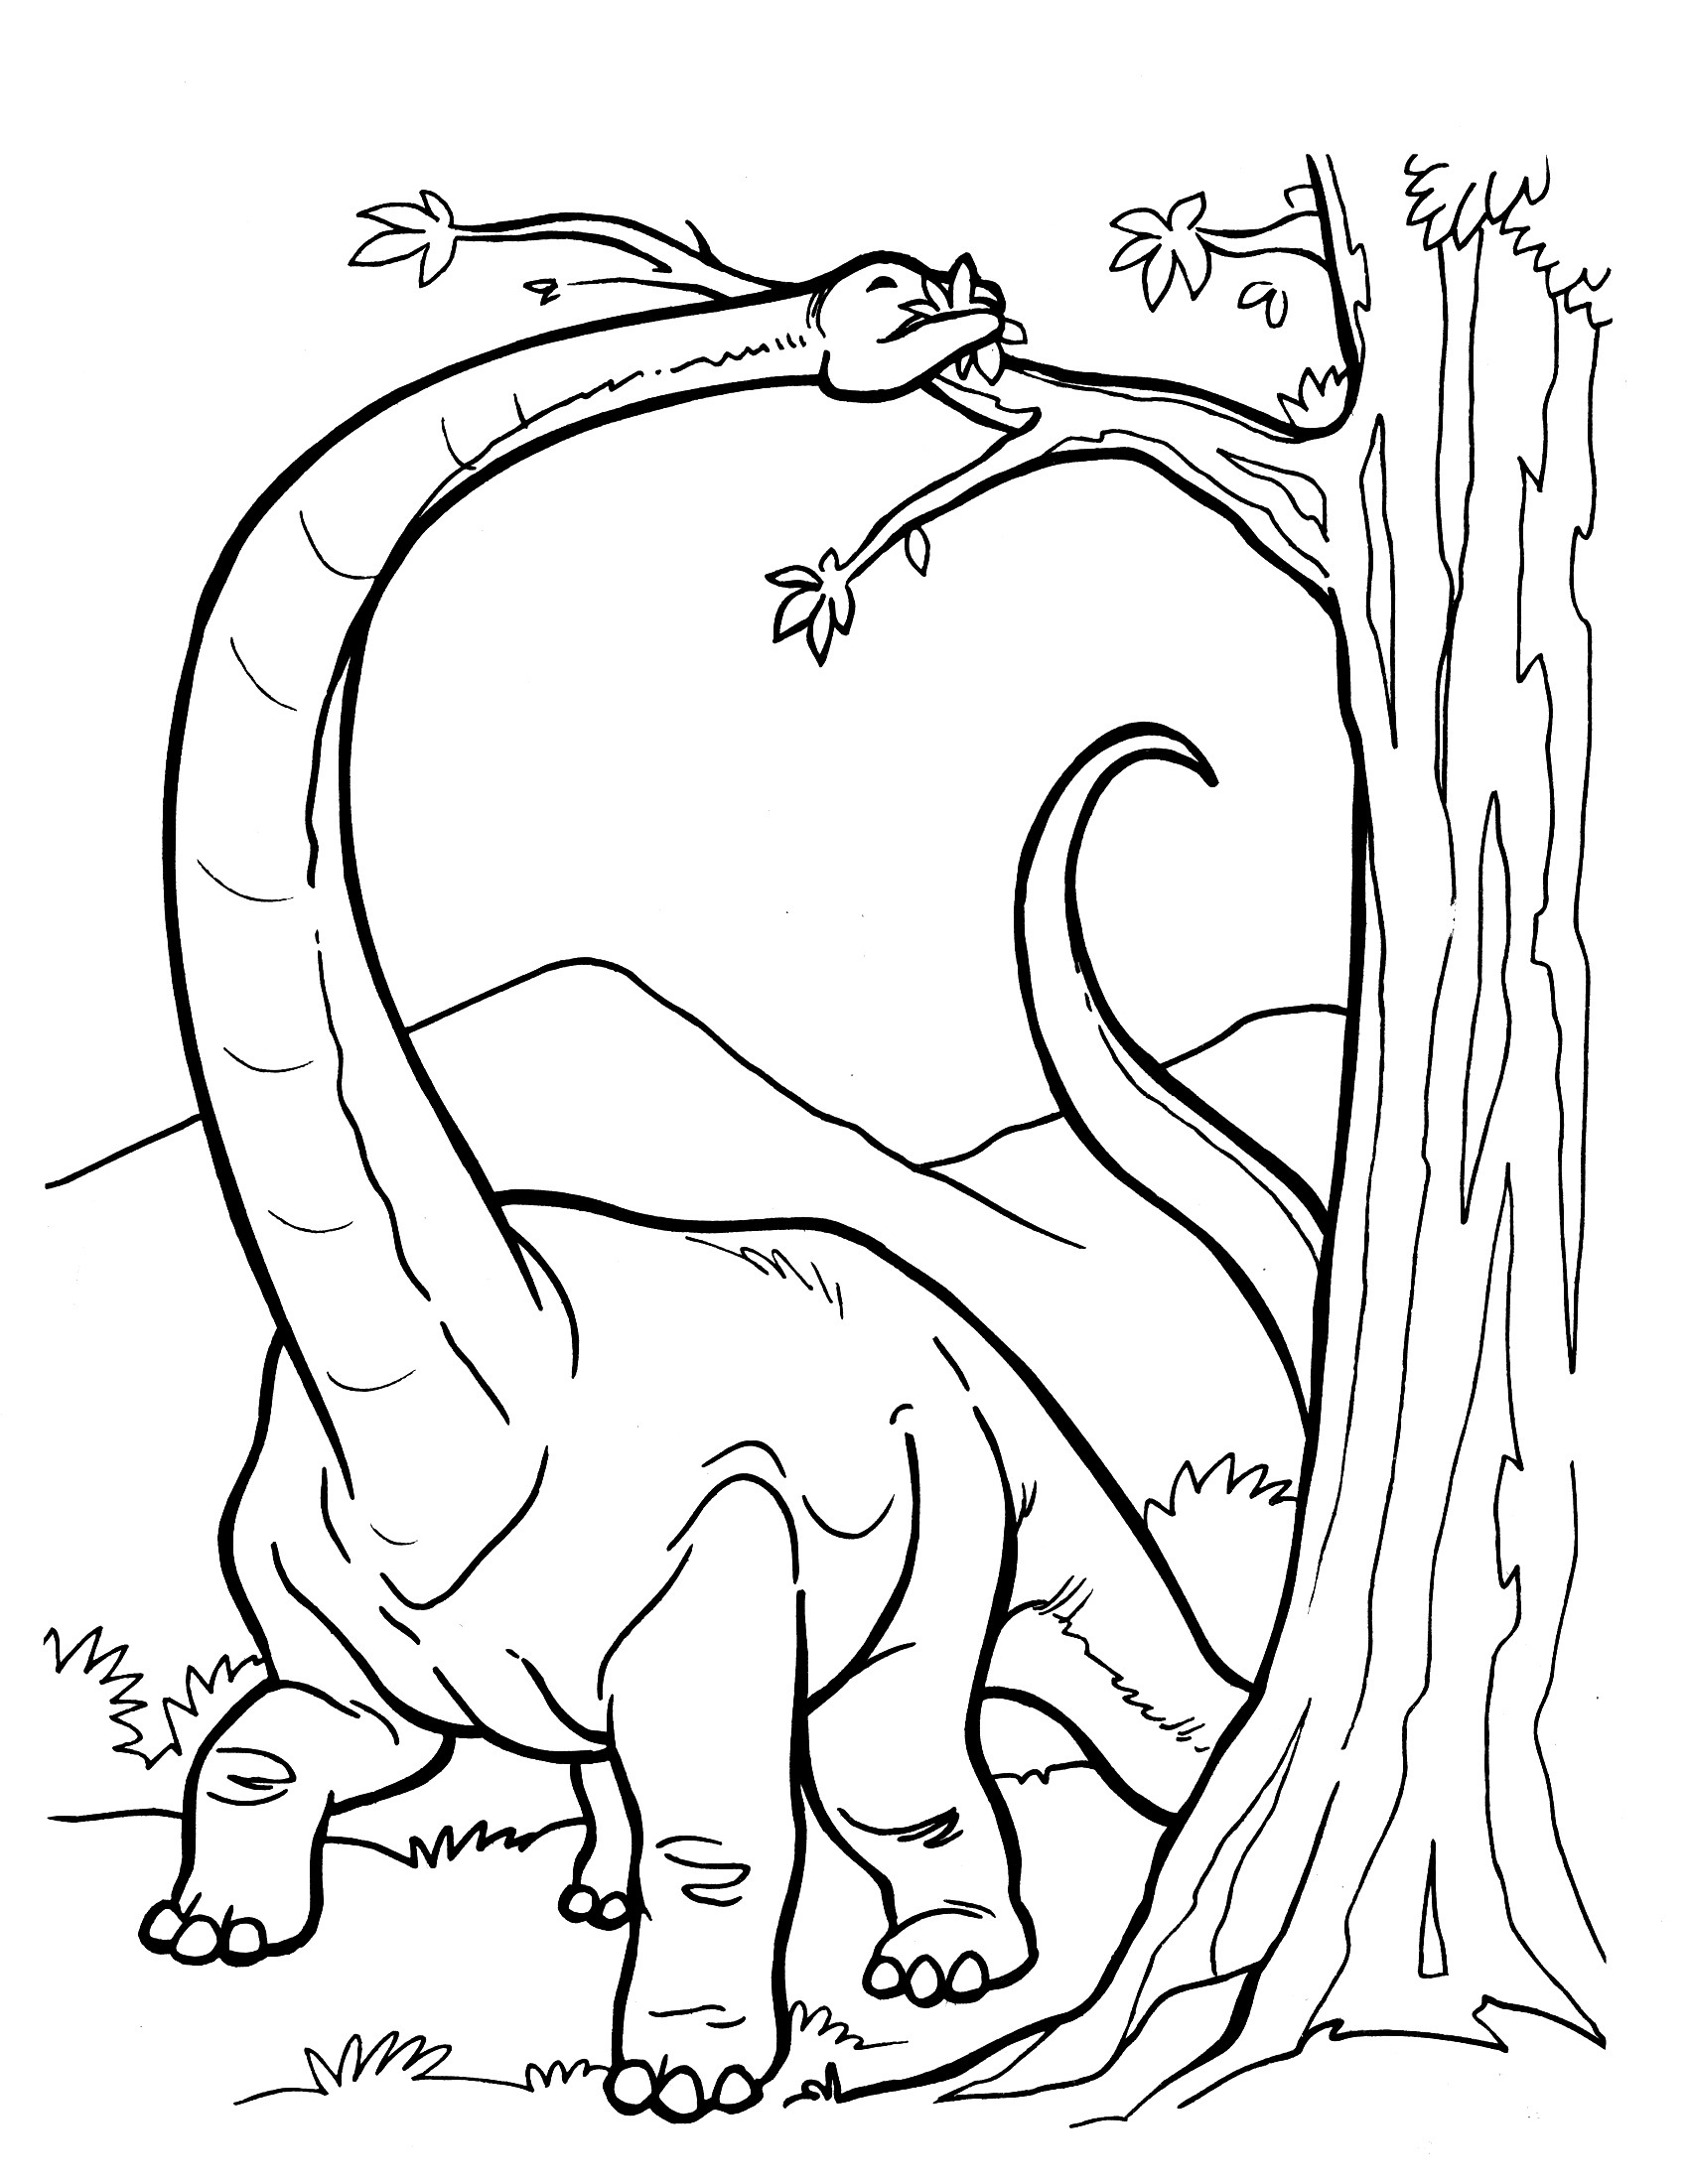 Dinosaur Coloring Sheets For Boys
 Long Dinosaur Coloring Pages